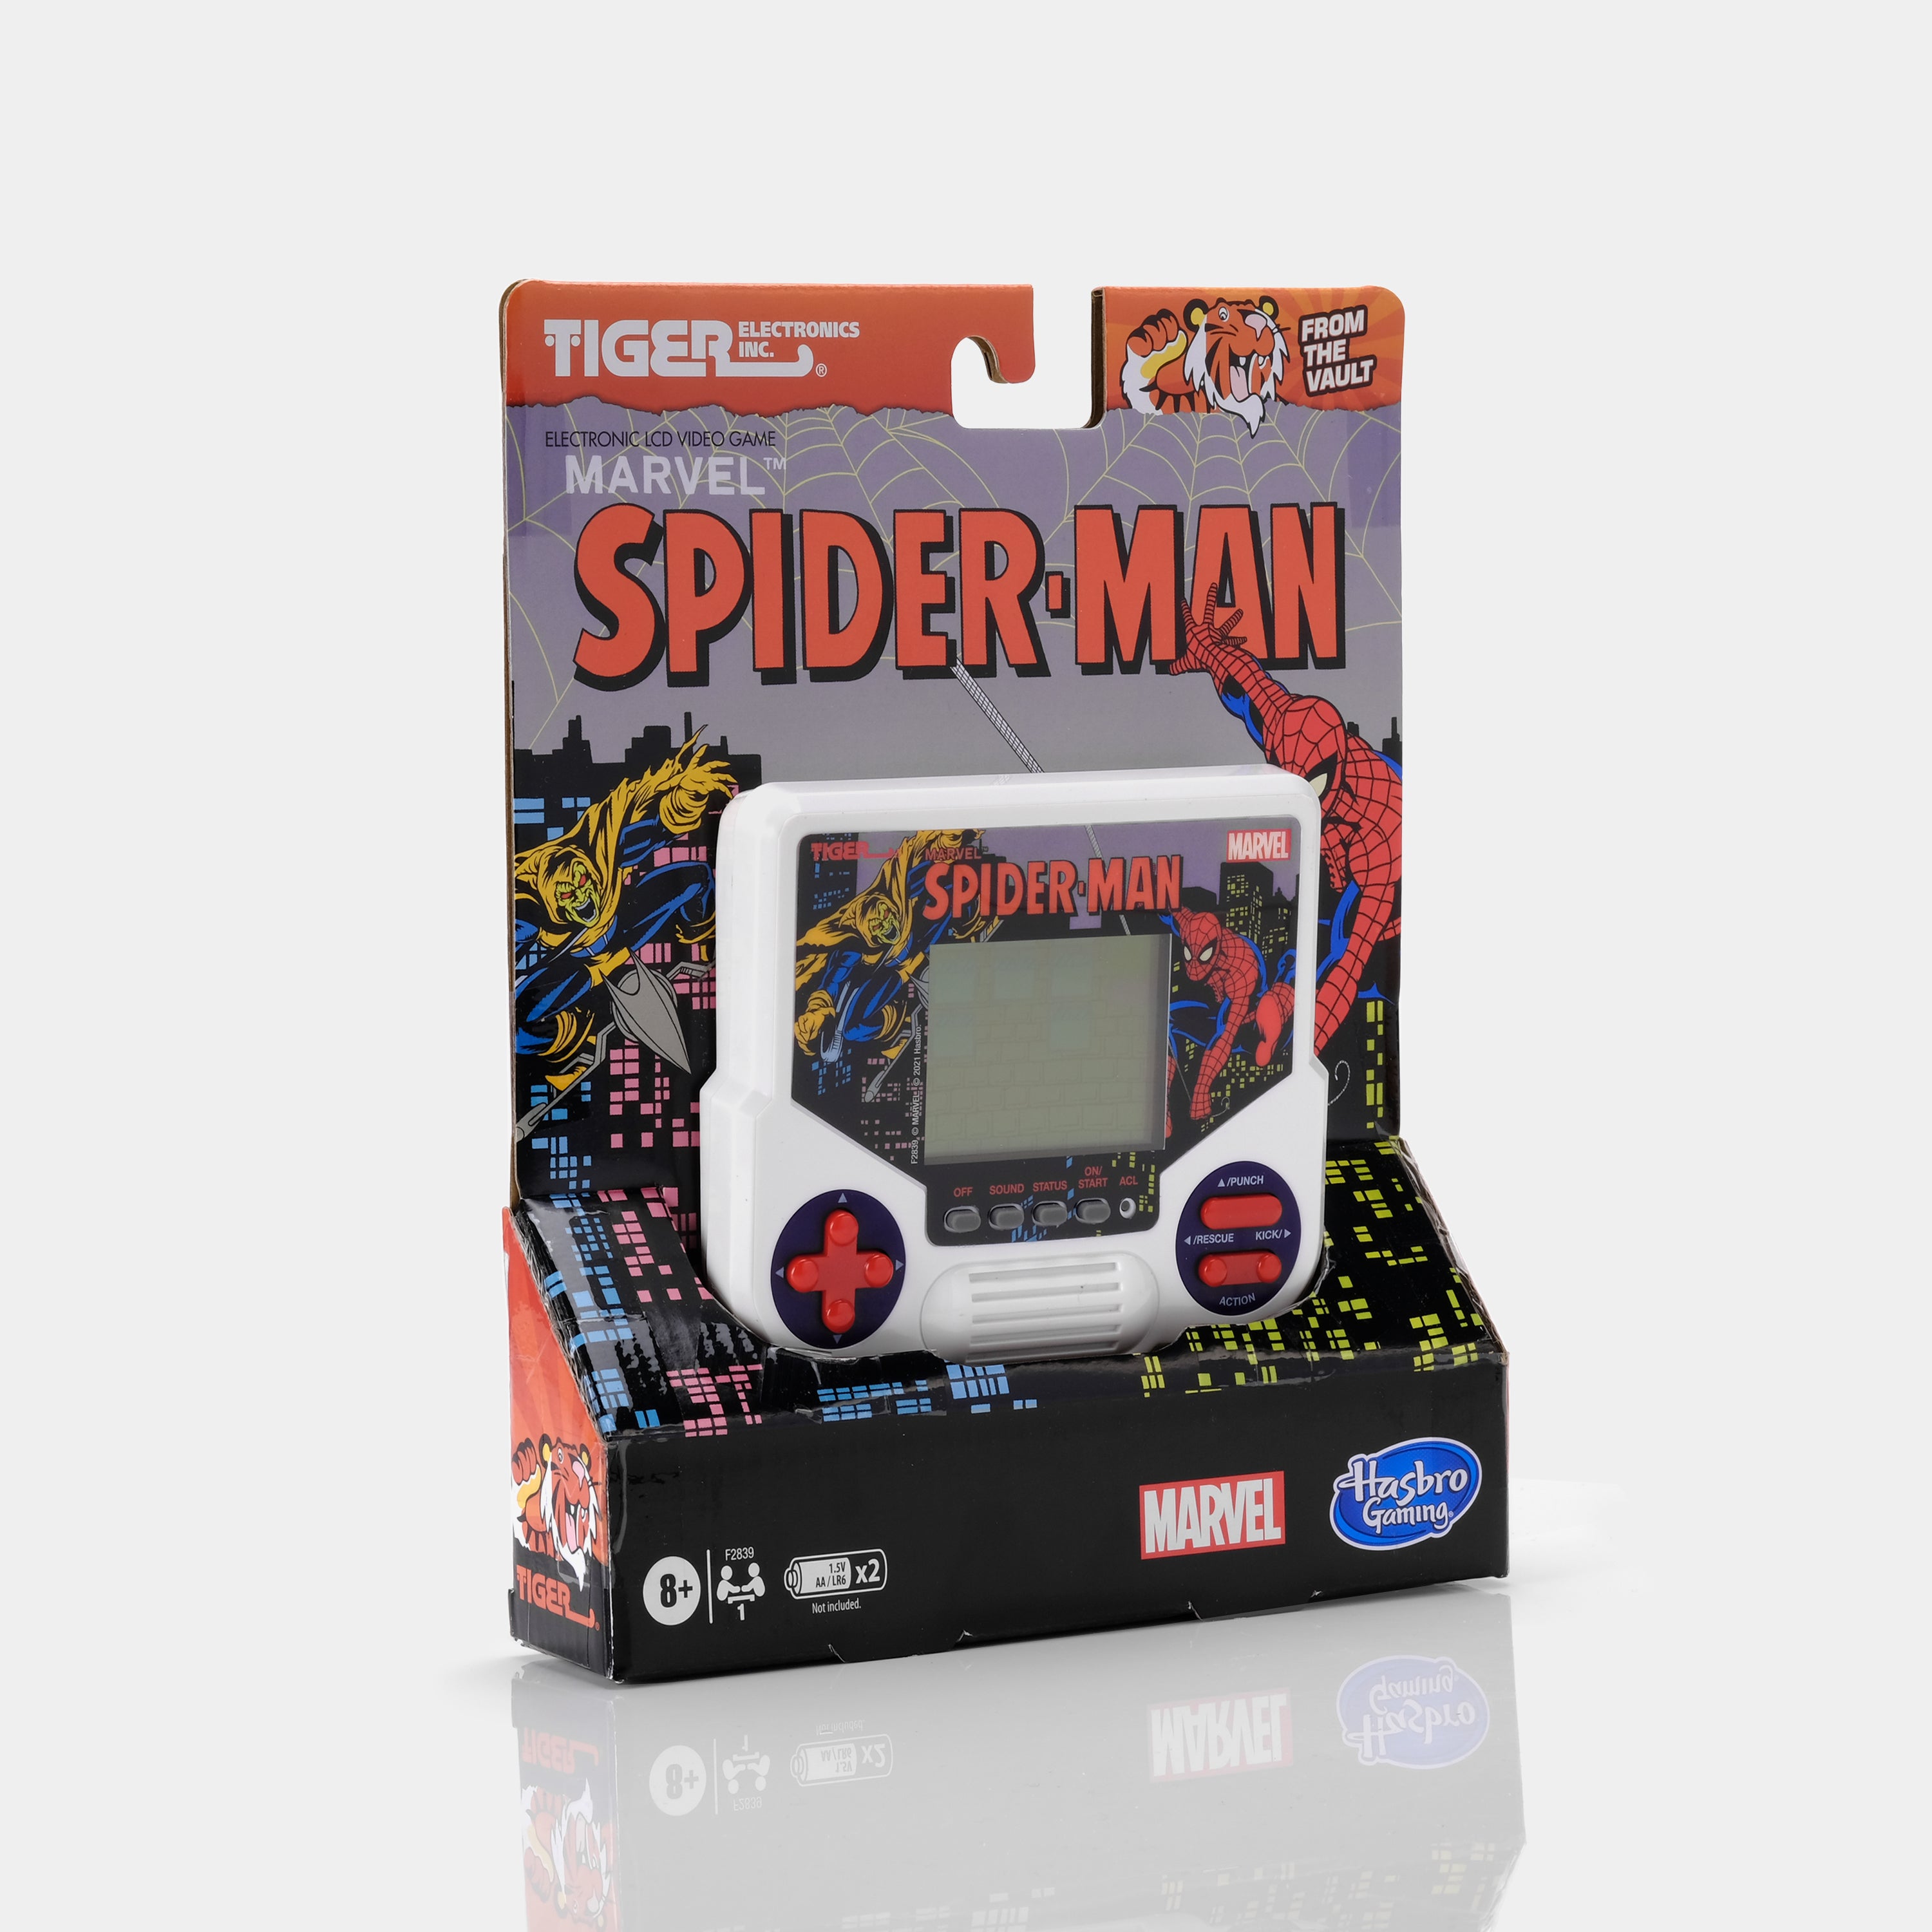 Spider-Man Handheld Video Game